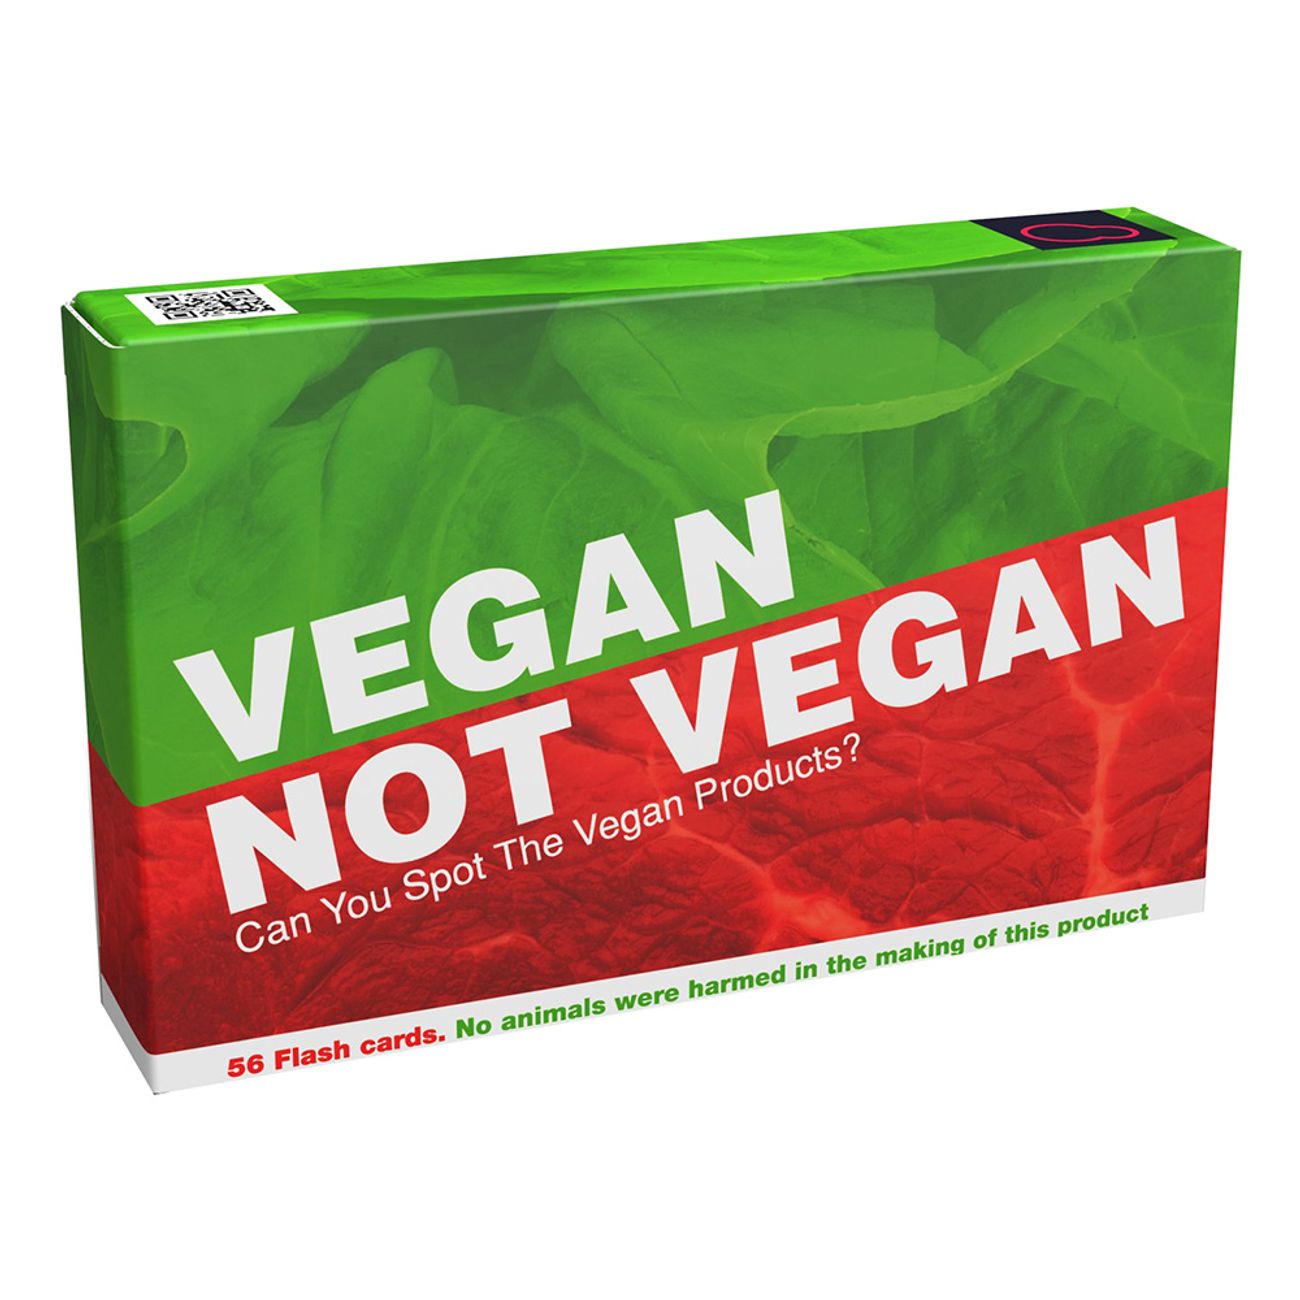 vegan-not-vegan-kortspel-1